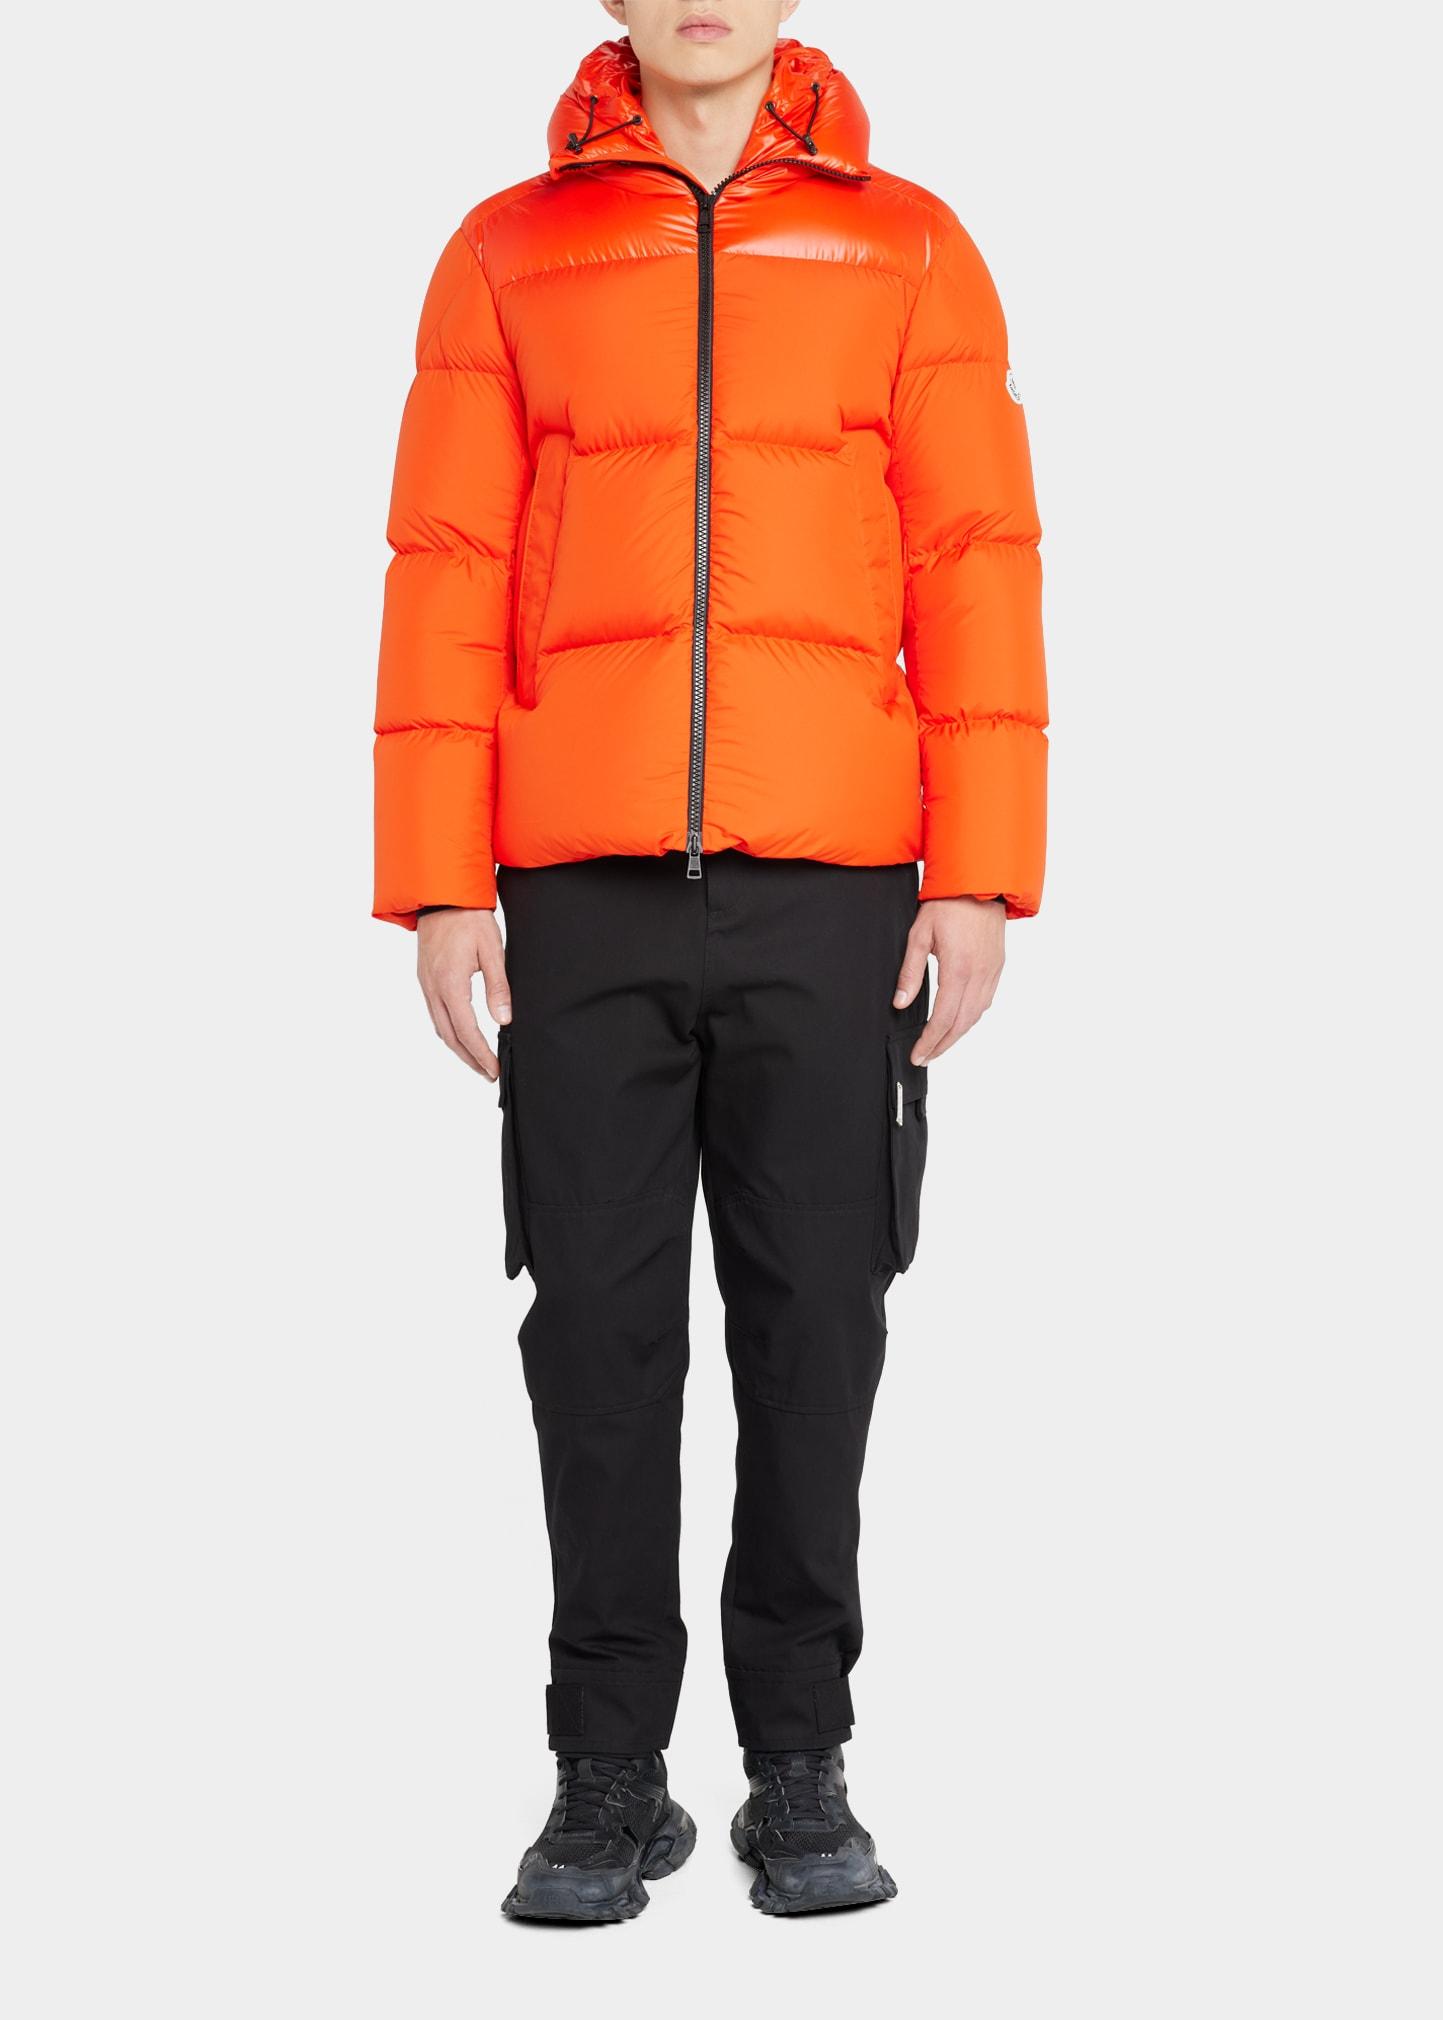 Moncler Damavand Quilted Puffer Jacket in Orange for Men | Lyst